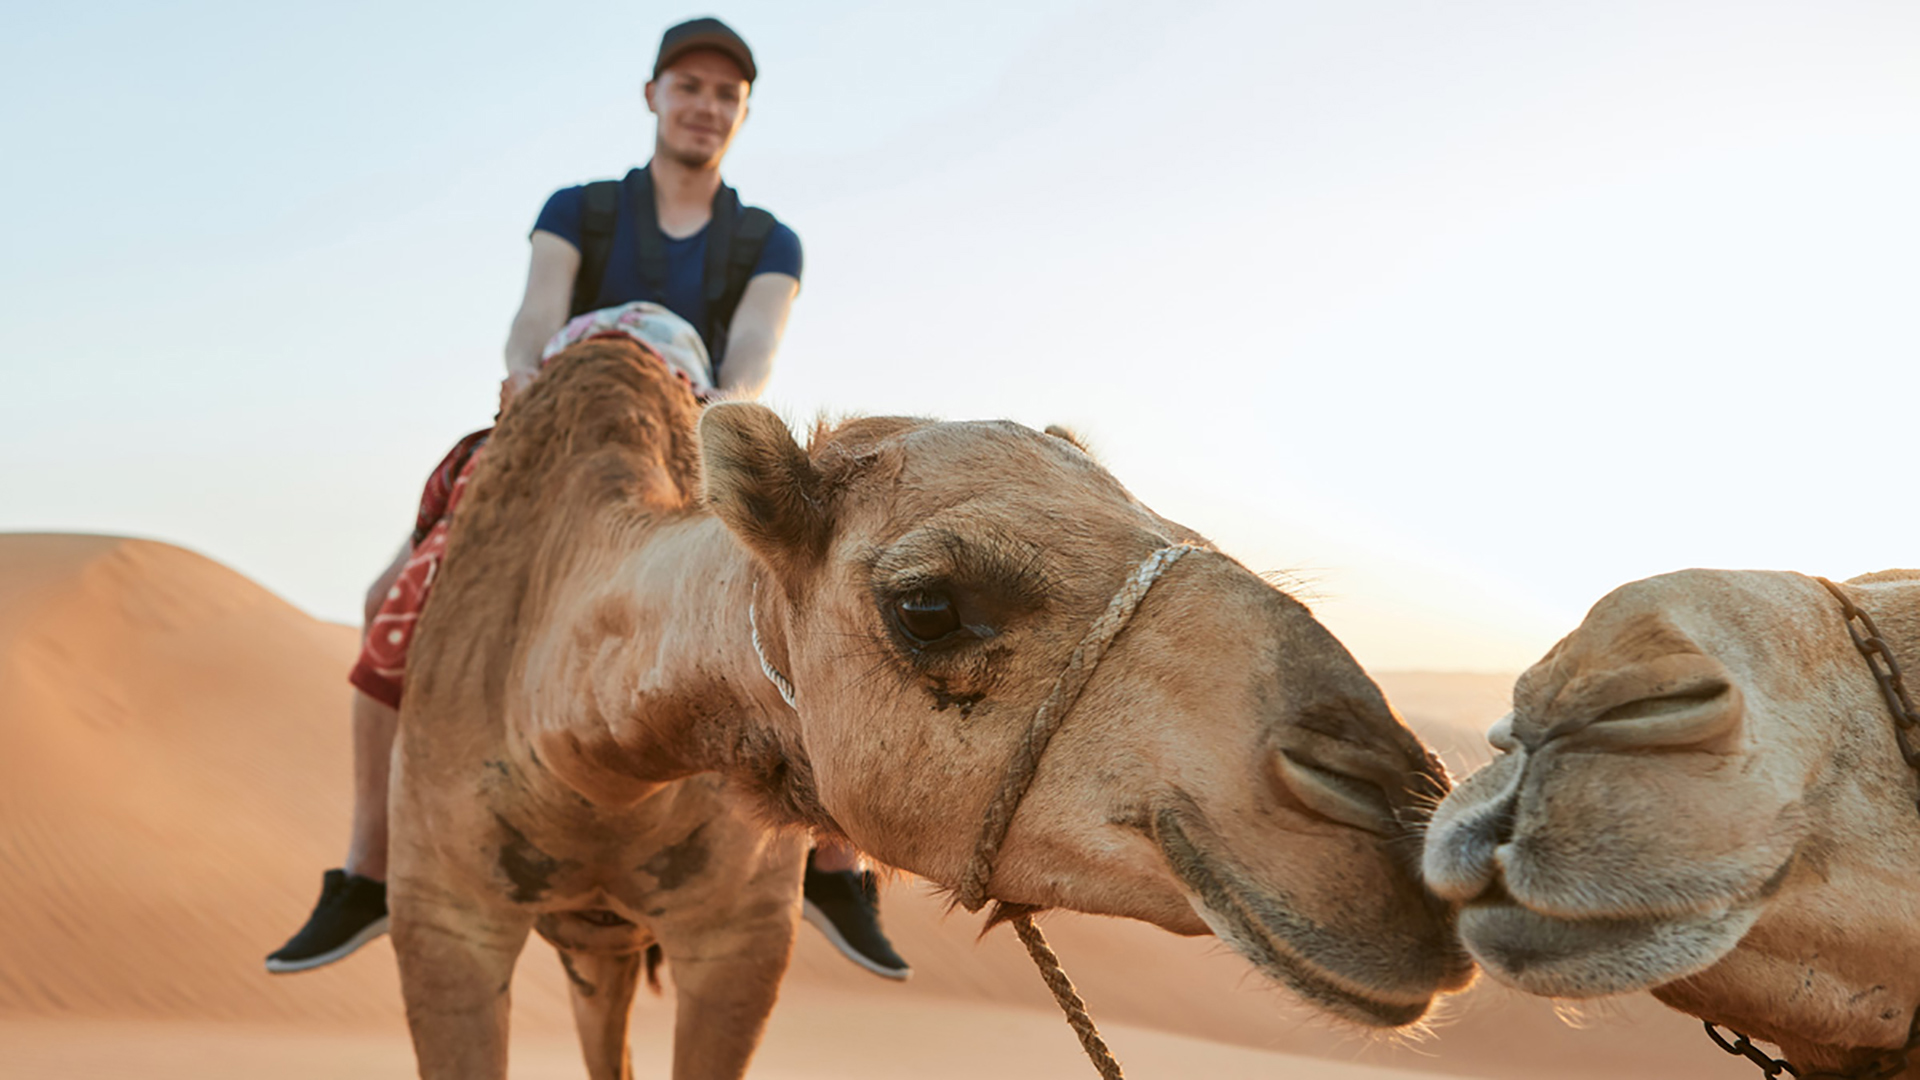 Dubai Red Dune Safari with Quad Bike, Camel Ride & Sandboard